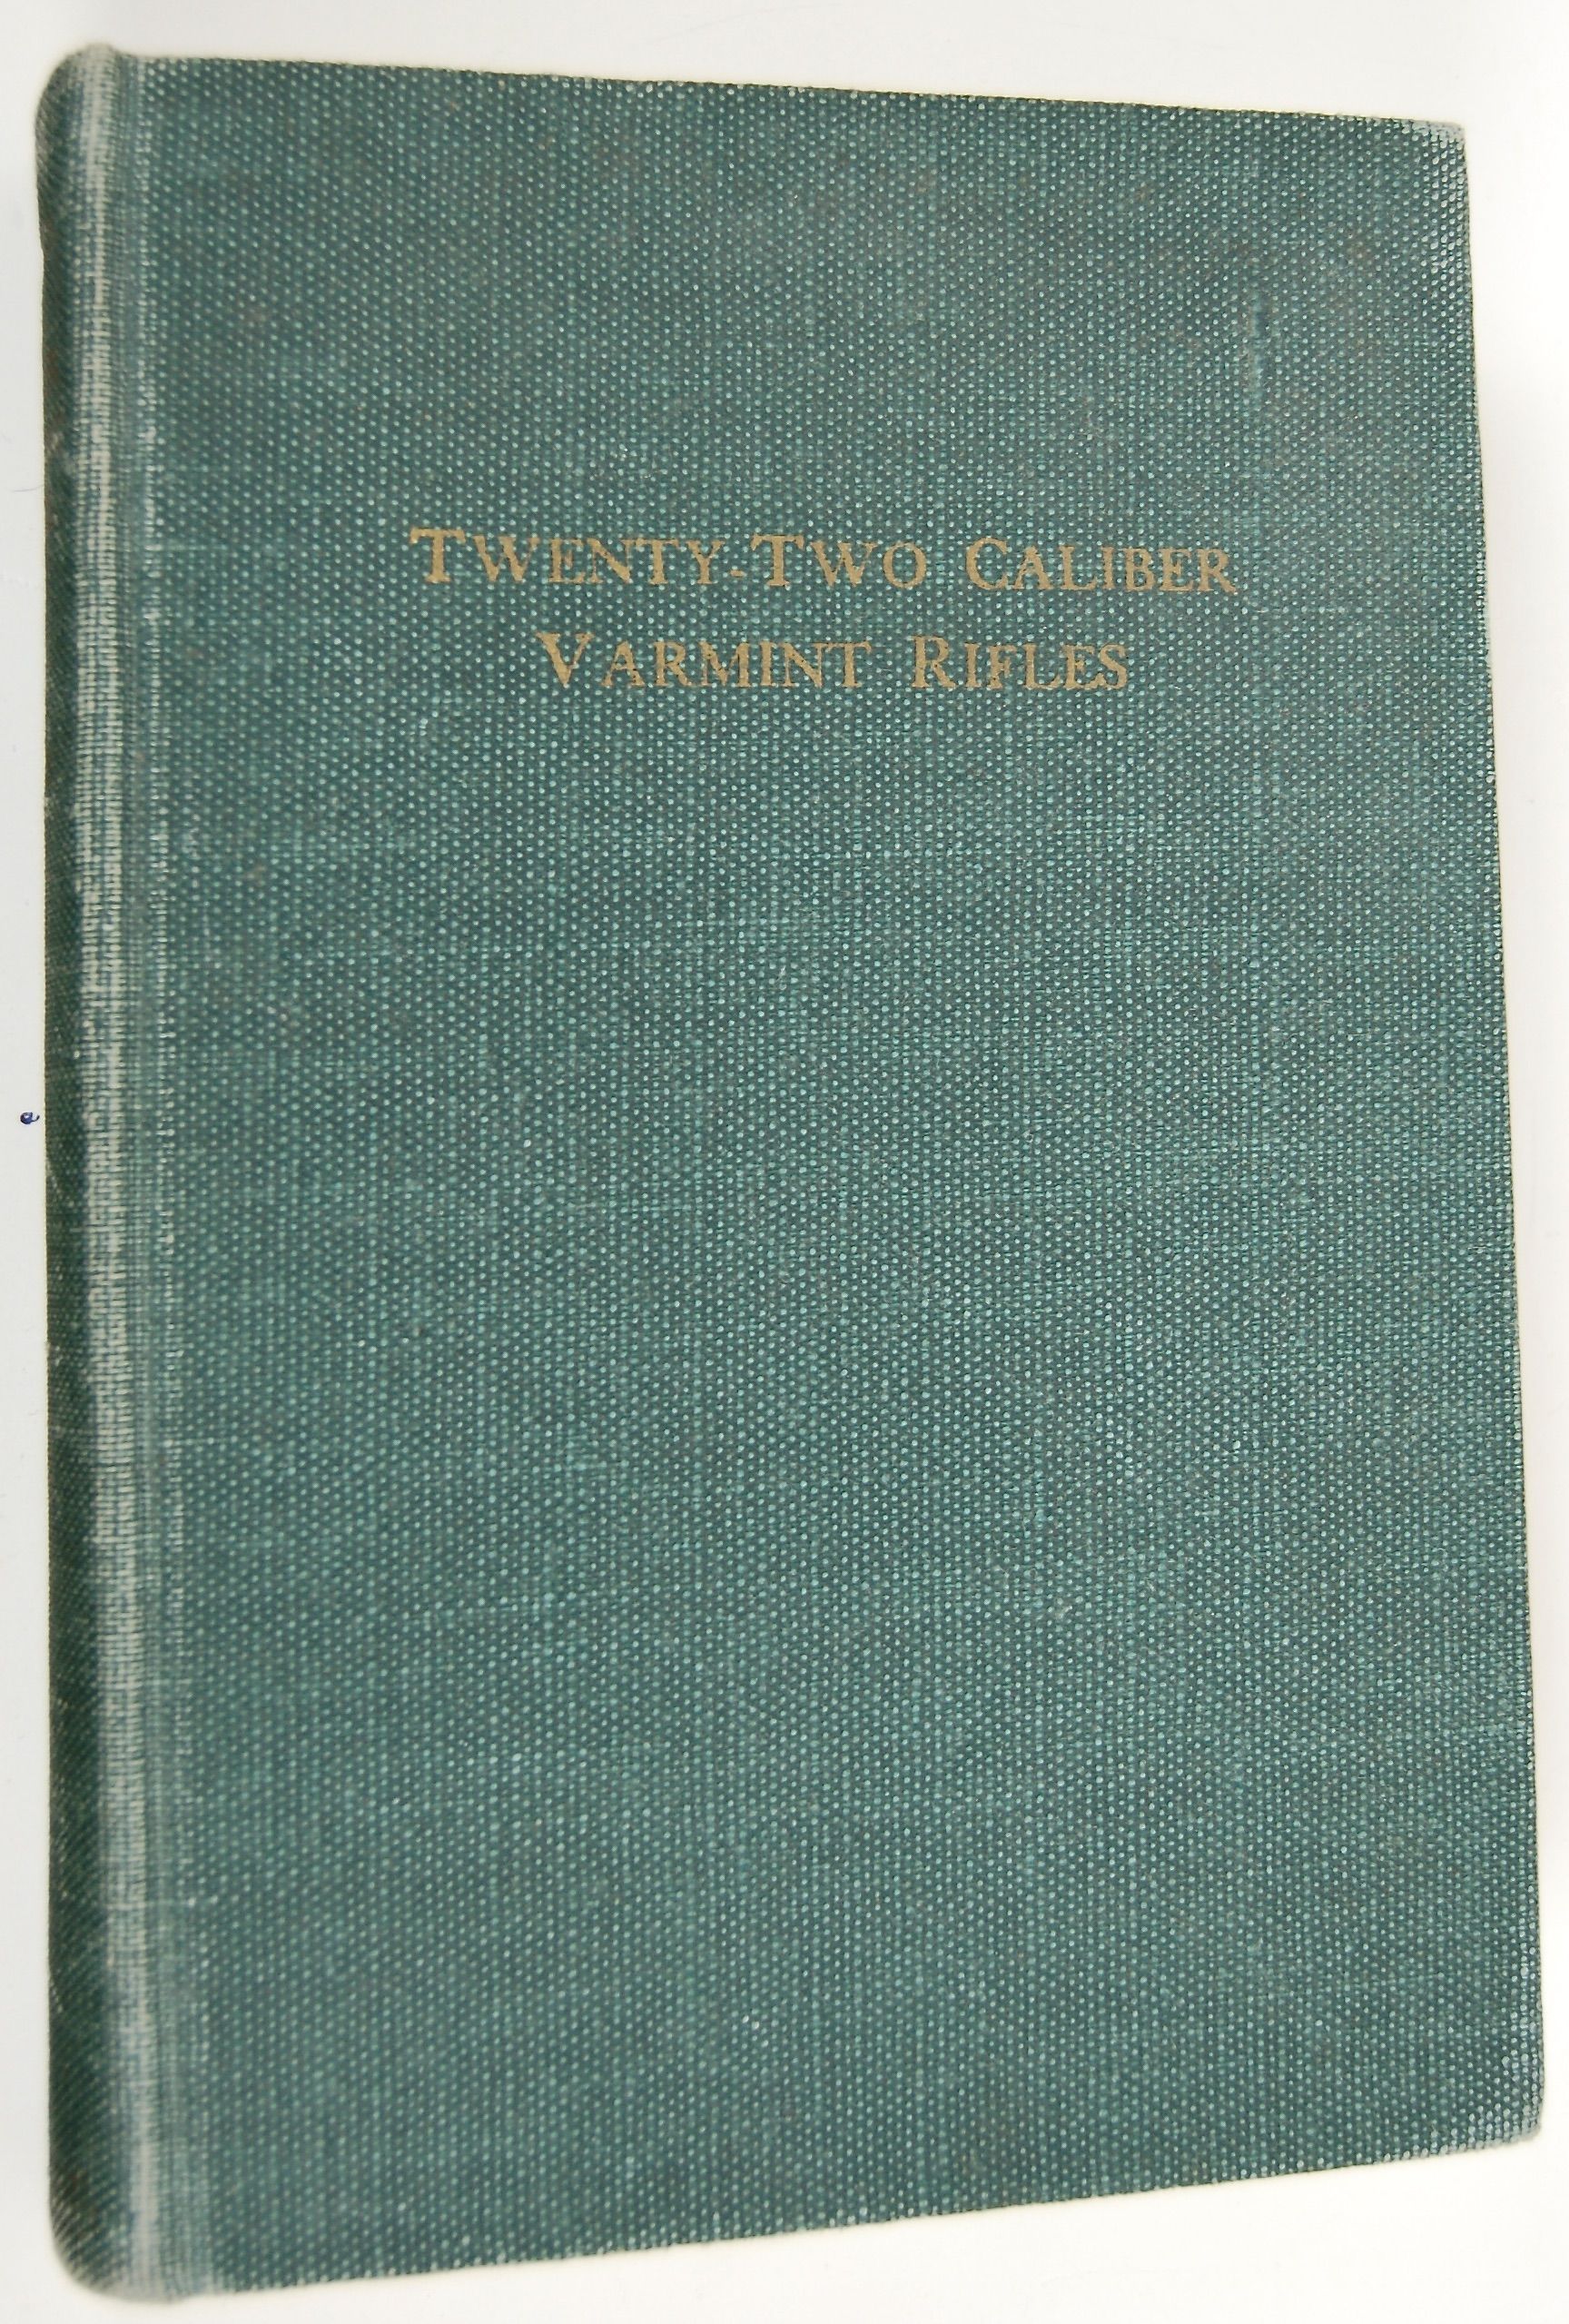 Twenty-two Caliber Varmint Rifles.